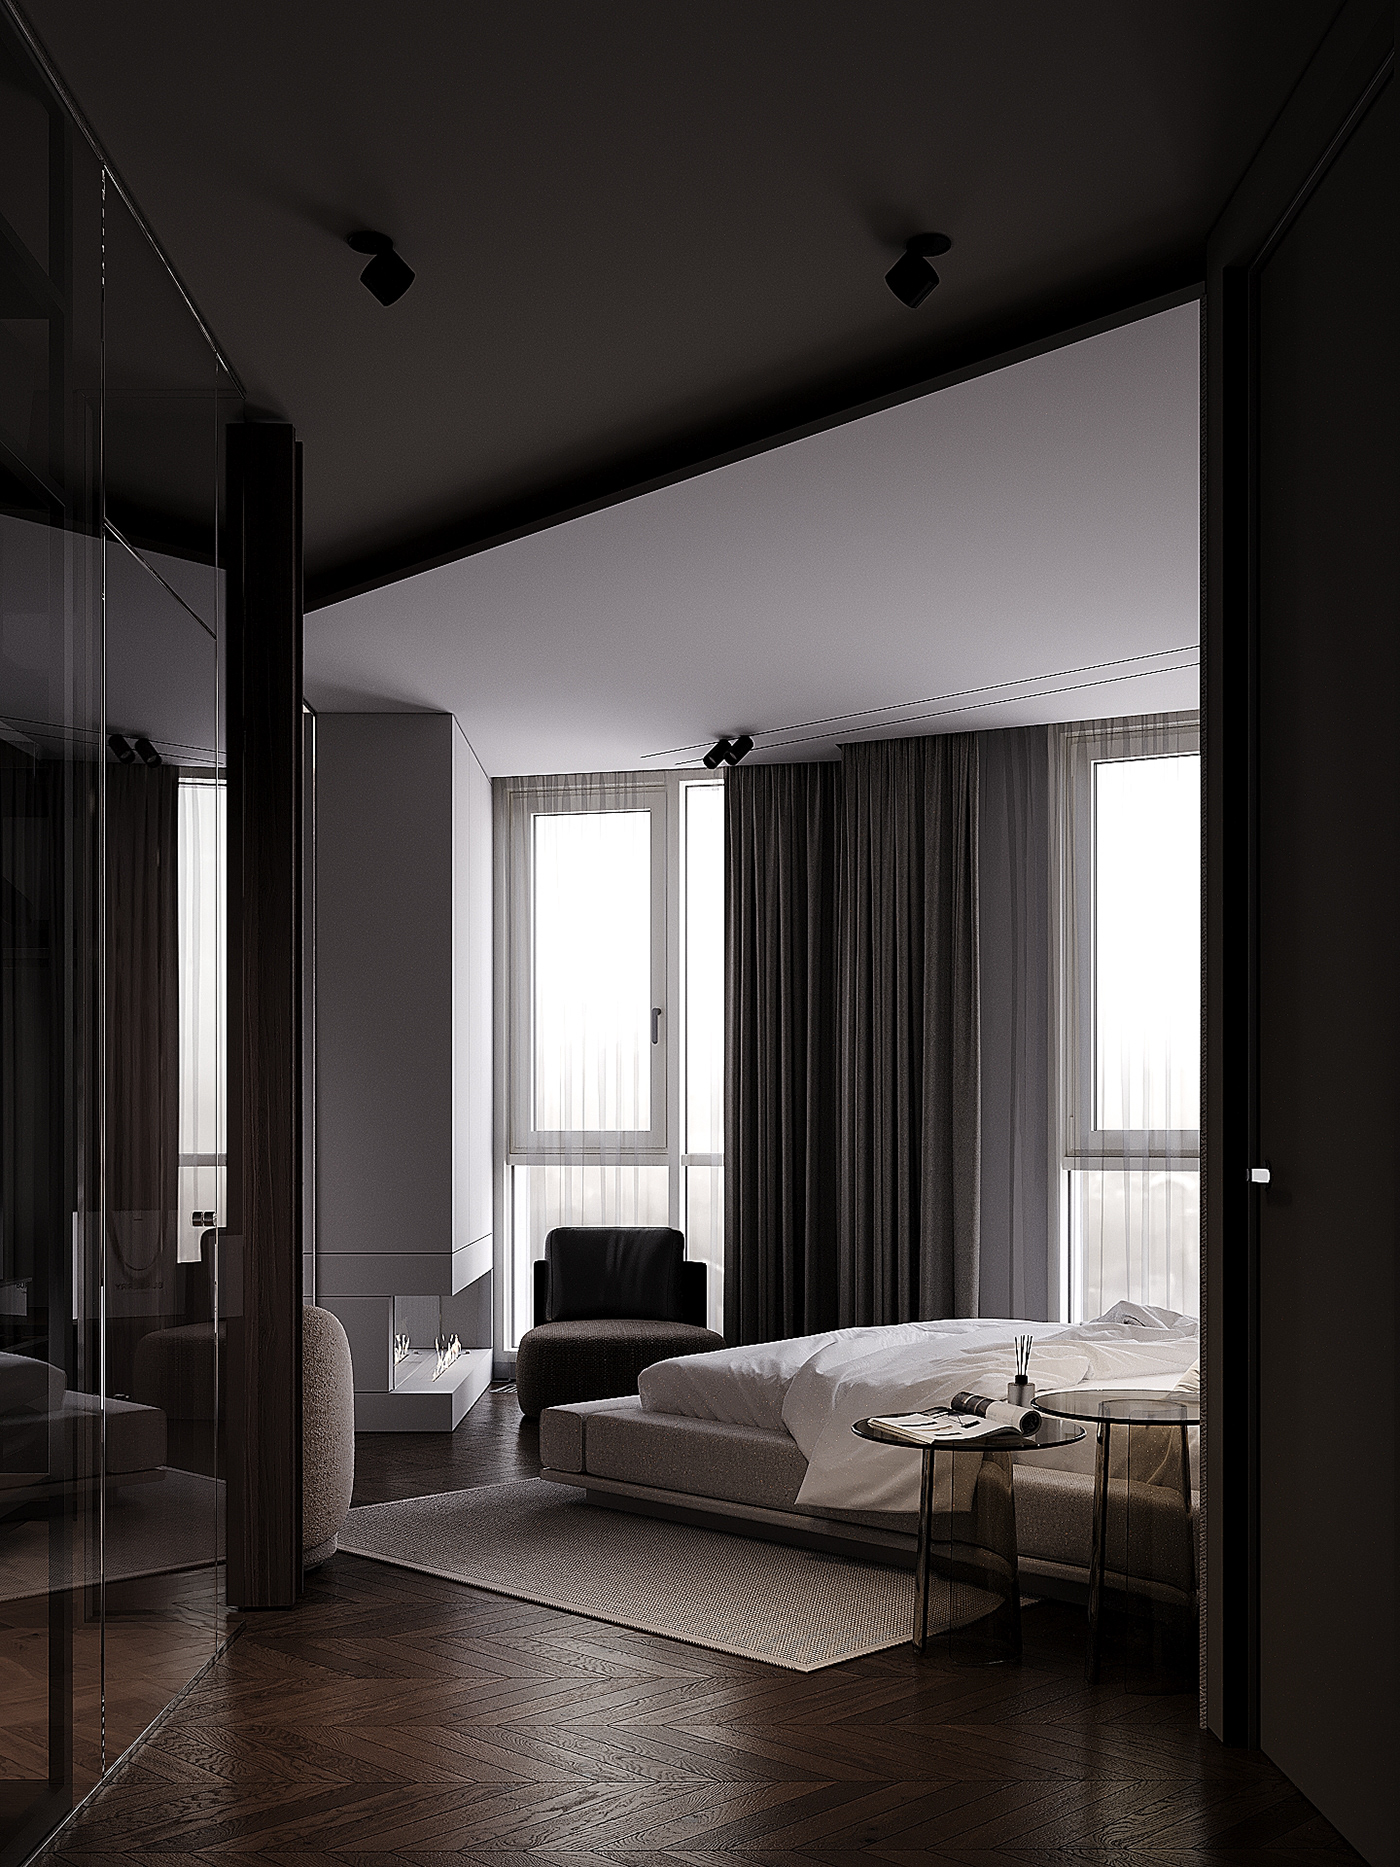 visualization deisgn Render interior design  architecture 3ds max corona modern minimal bedroom